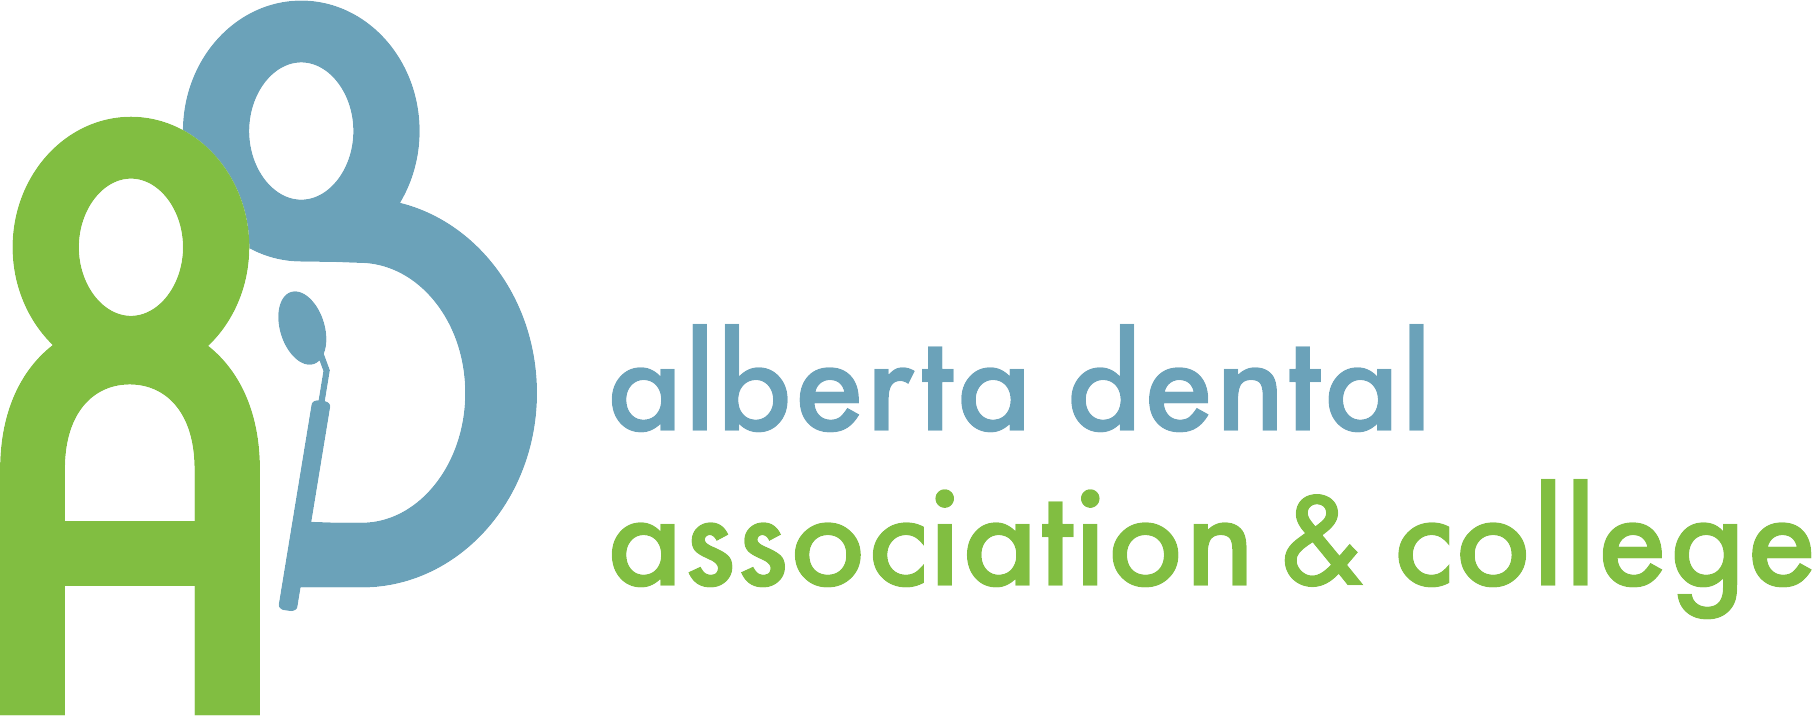 Alberta Logo - Home - Alberta Dental Association and College